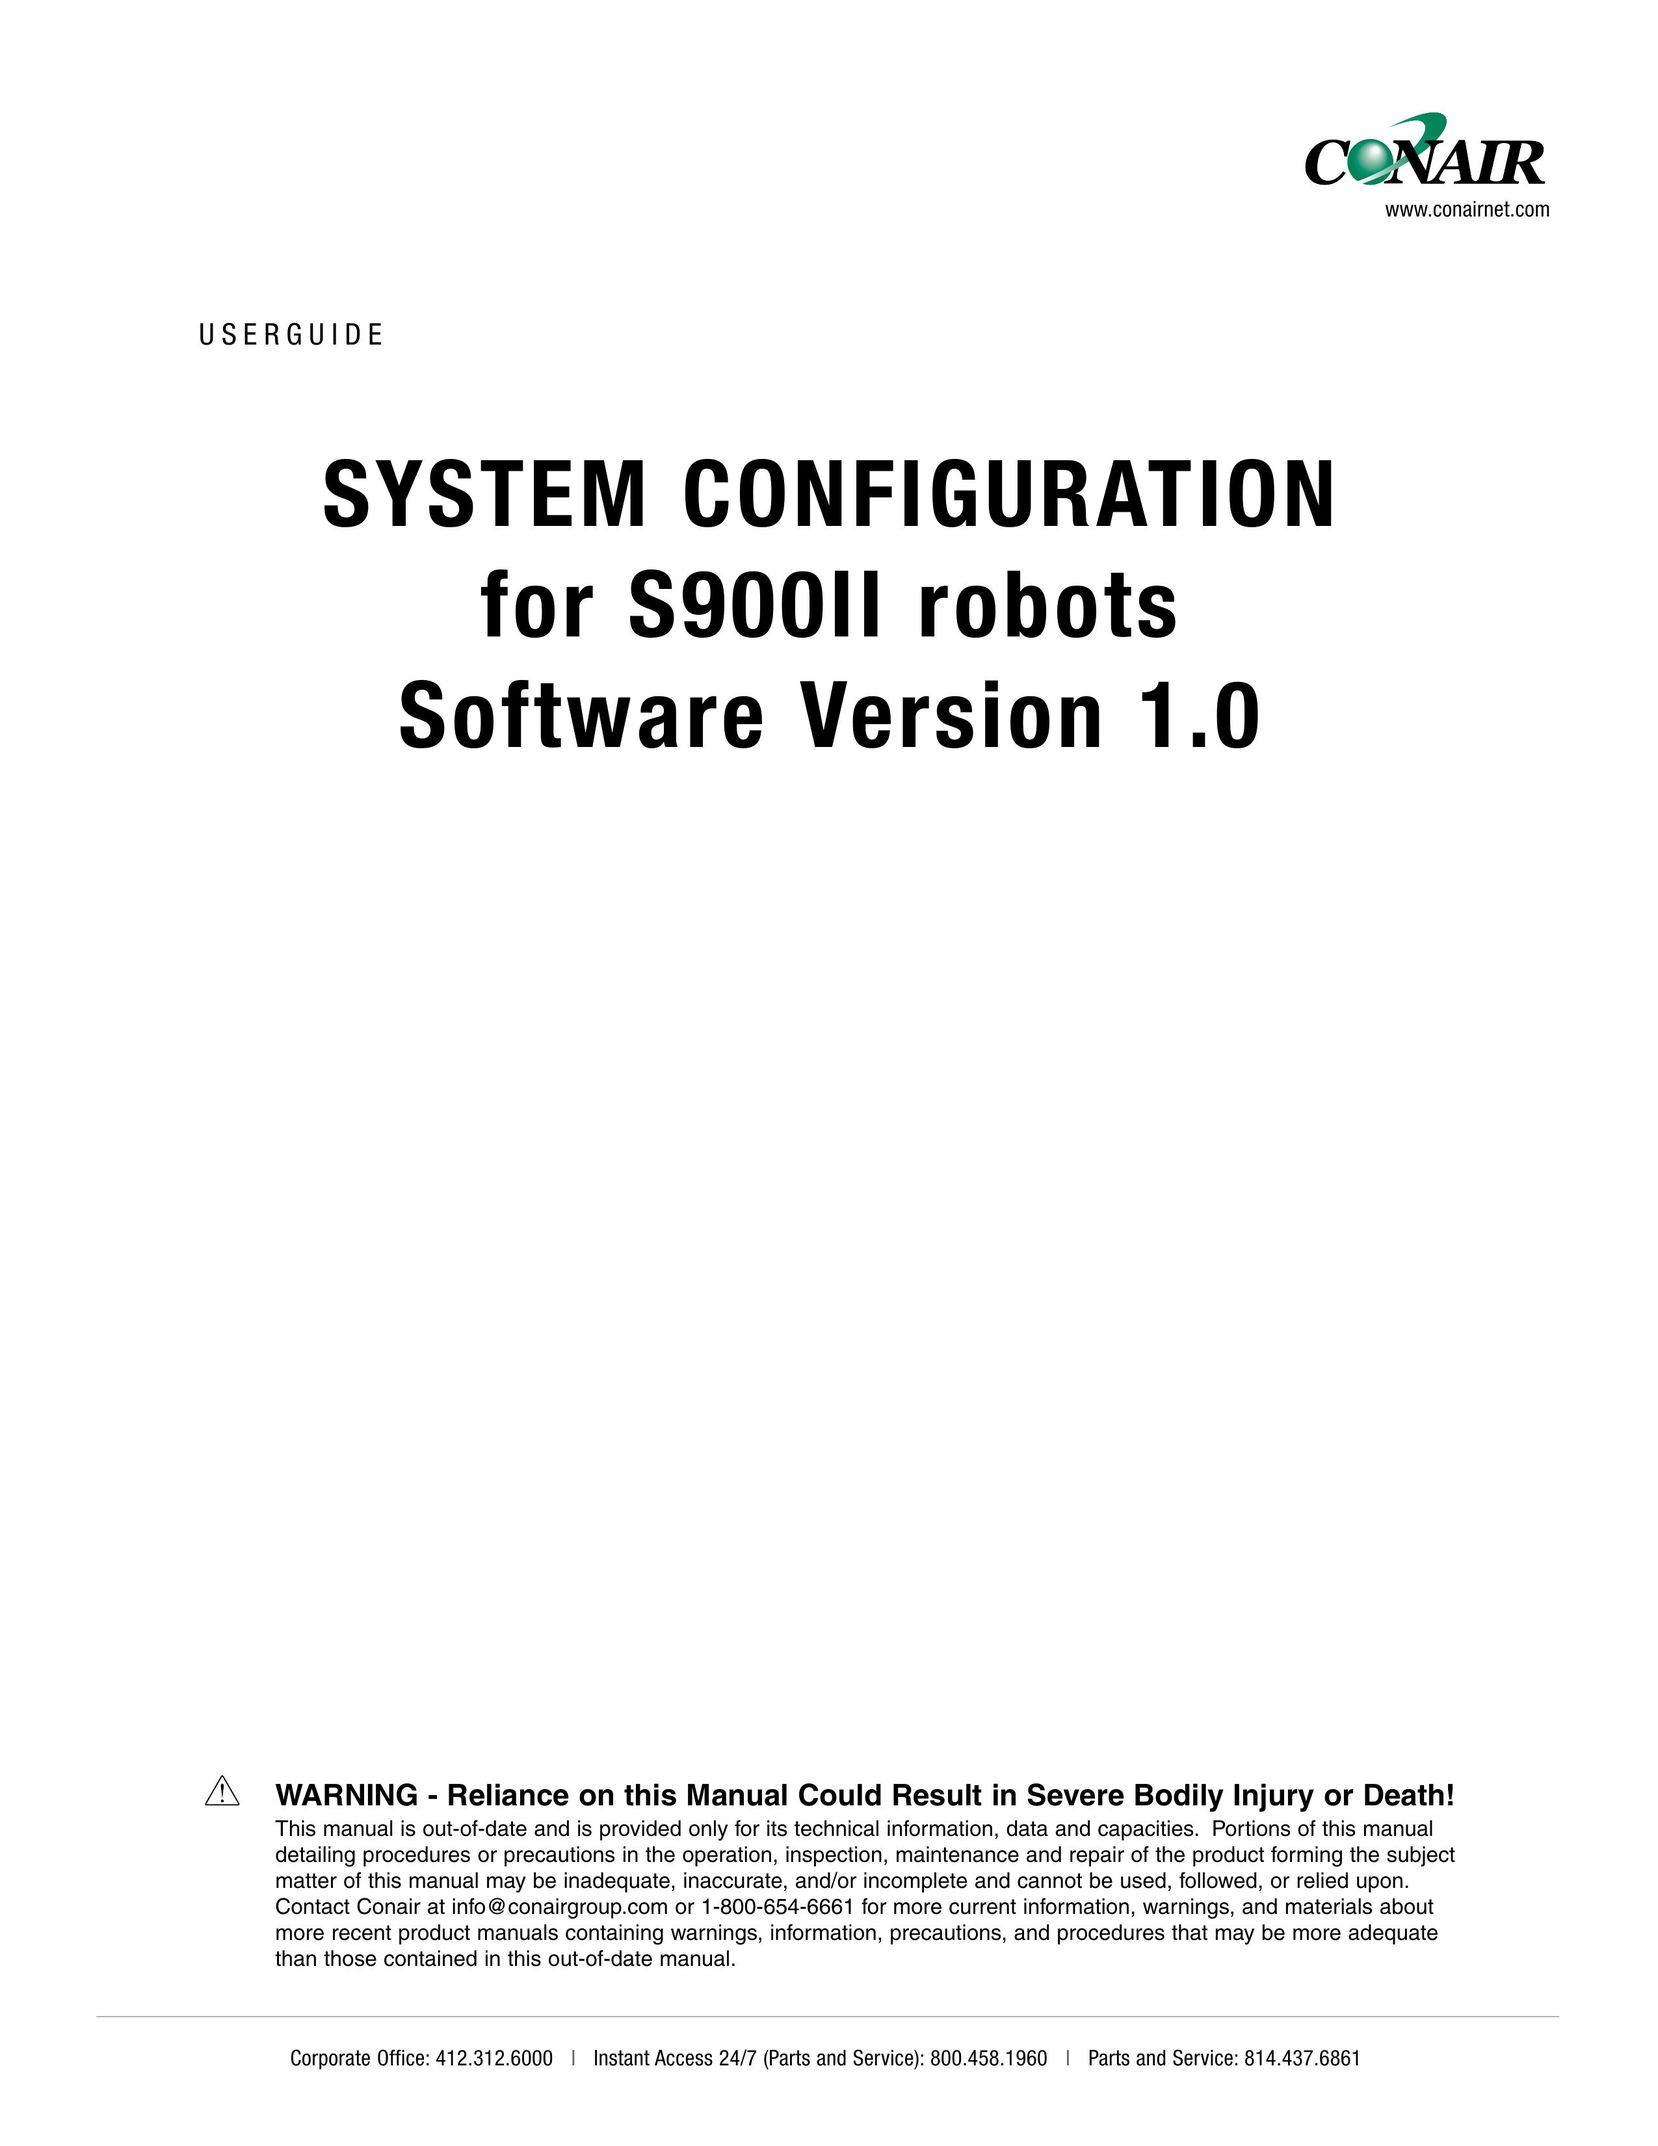 Conair S900II Robotics User Manual